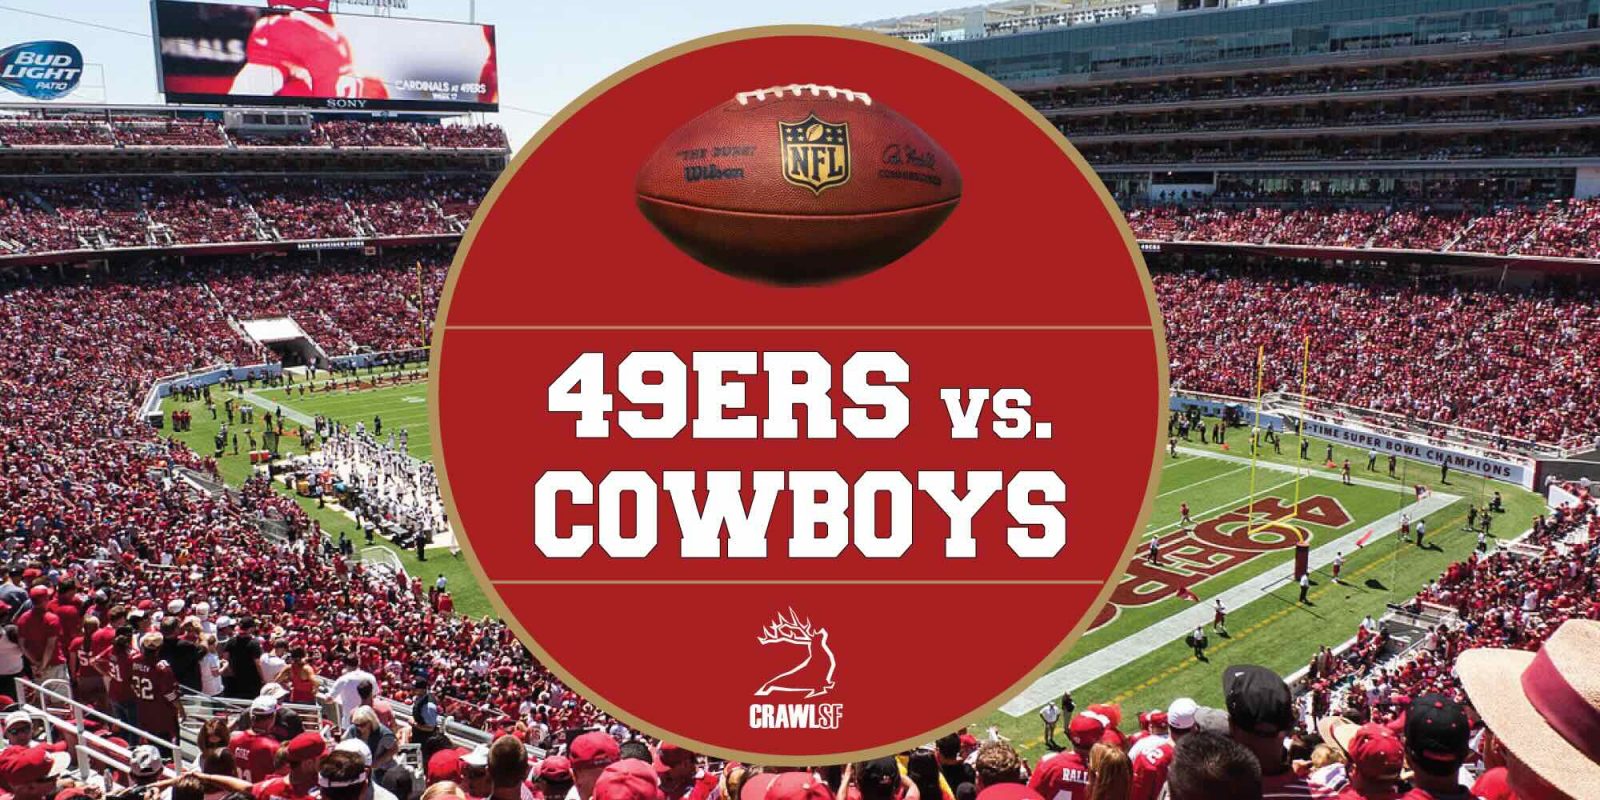 NFL Football Game 49ers vs. Cowboys